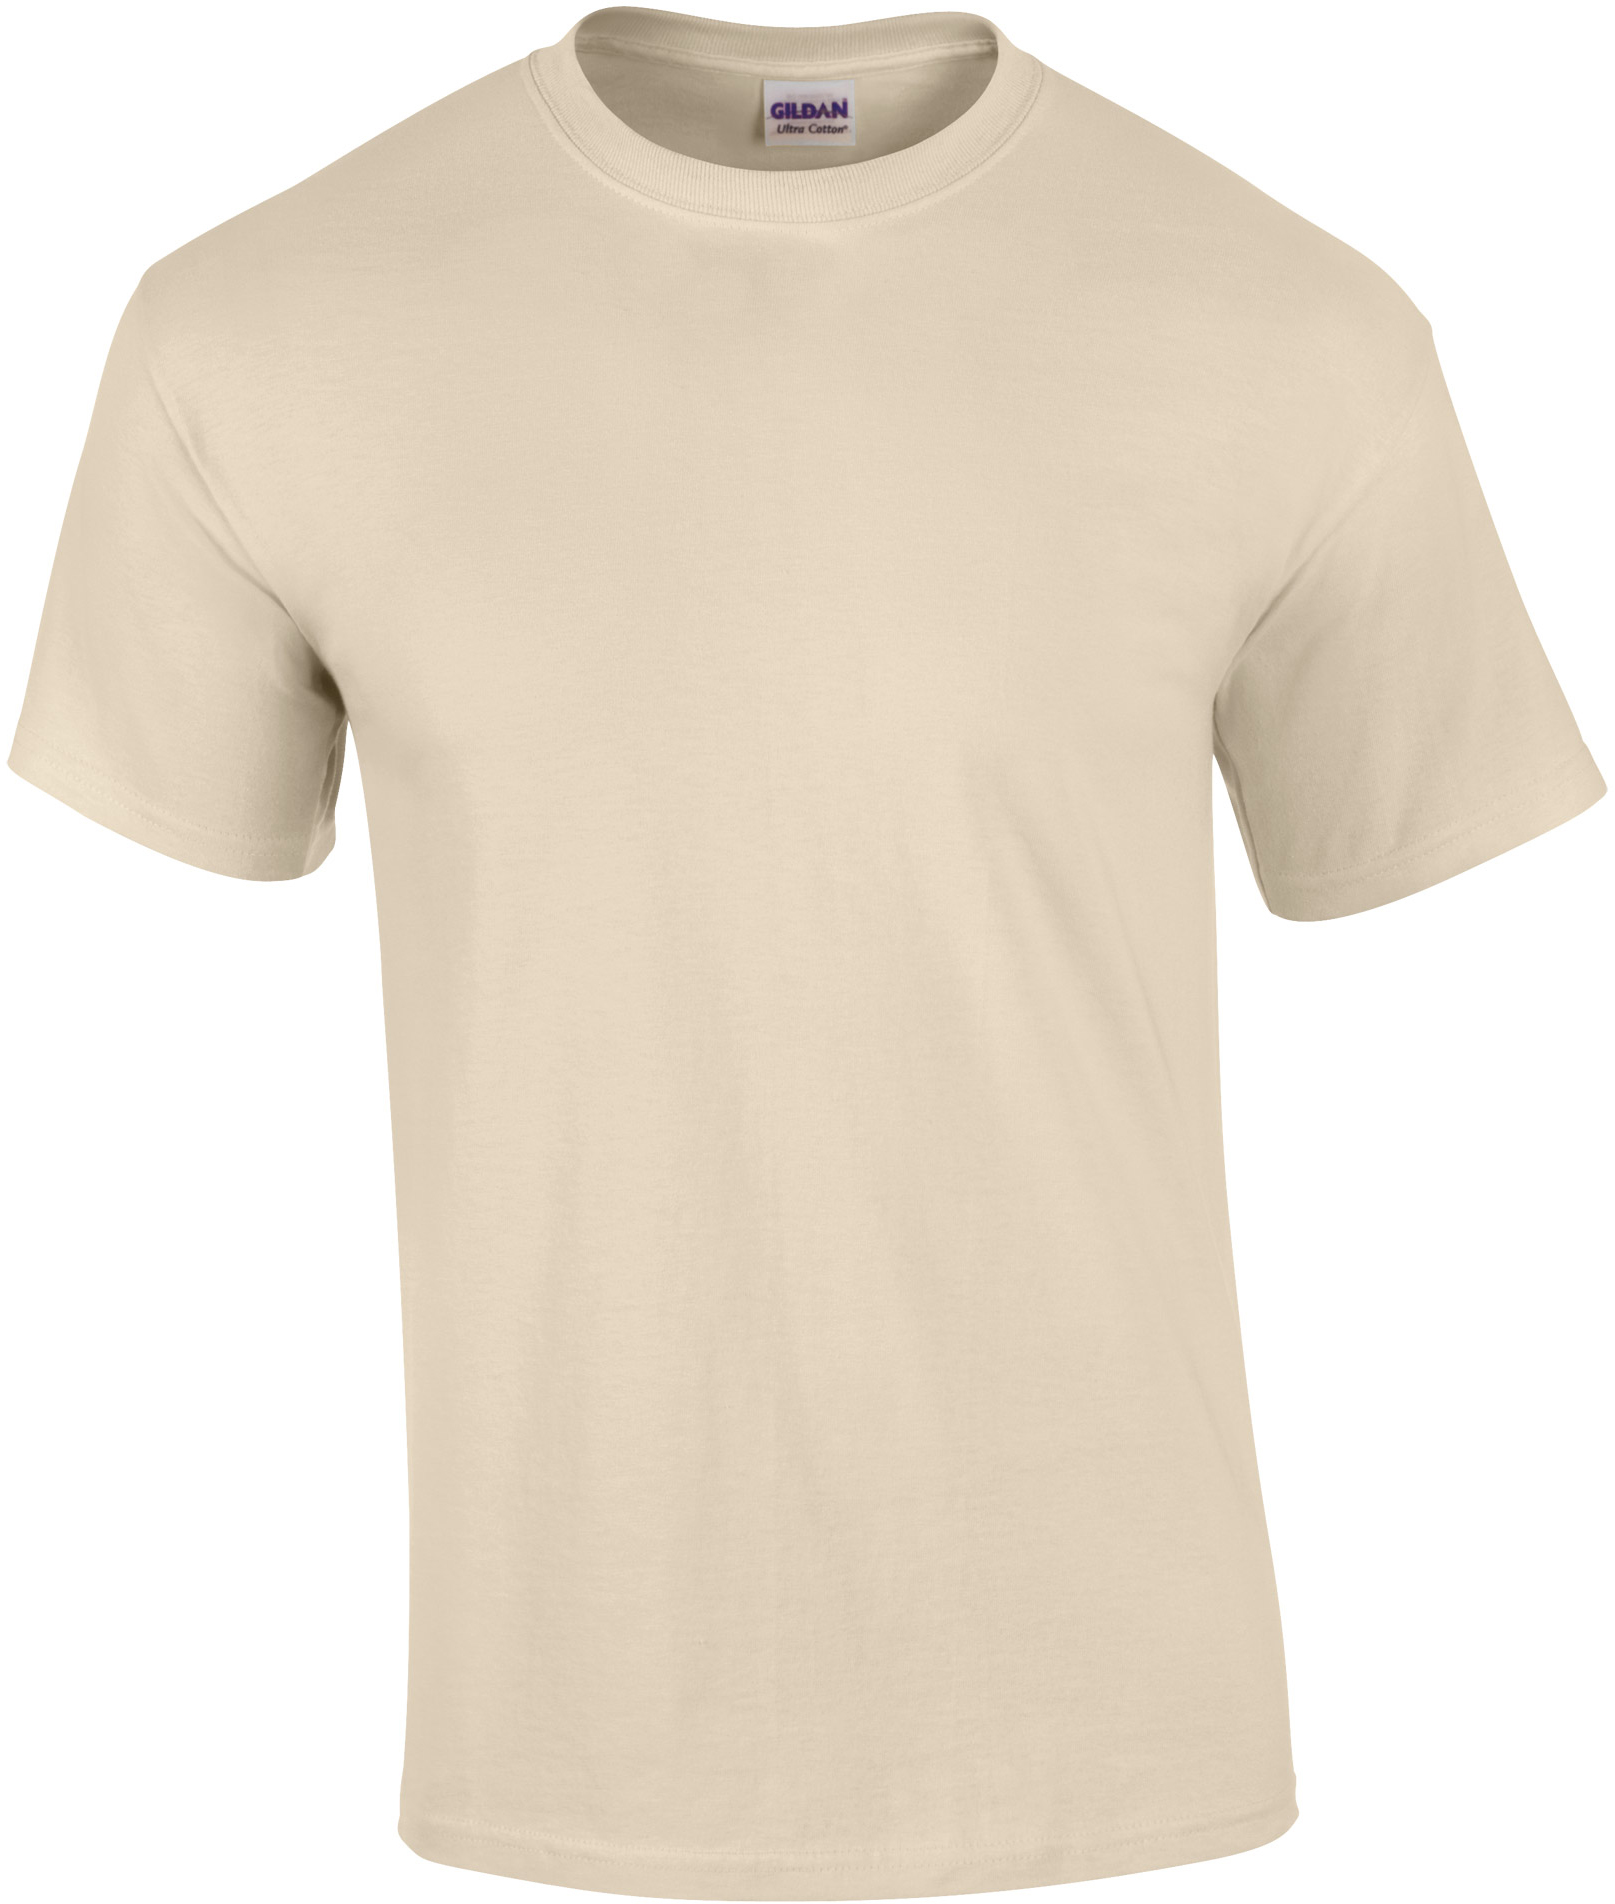 Tričko Gildan Ultra - Béžová L